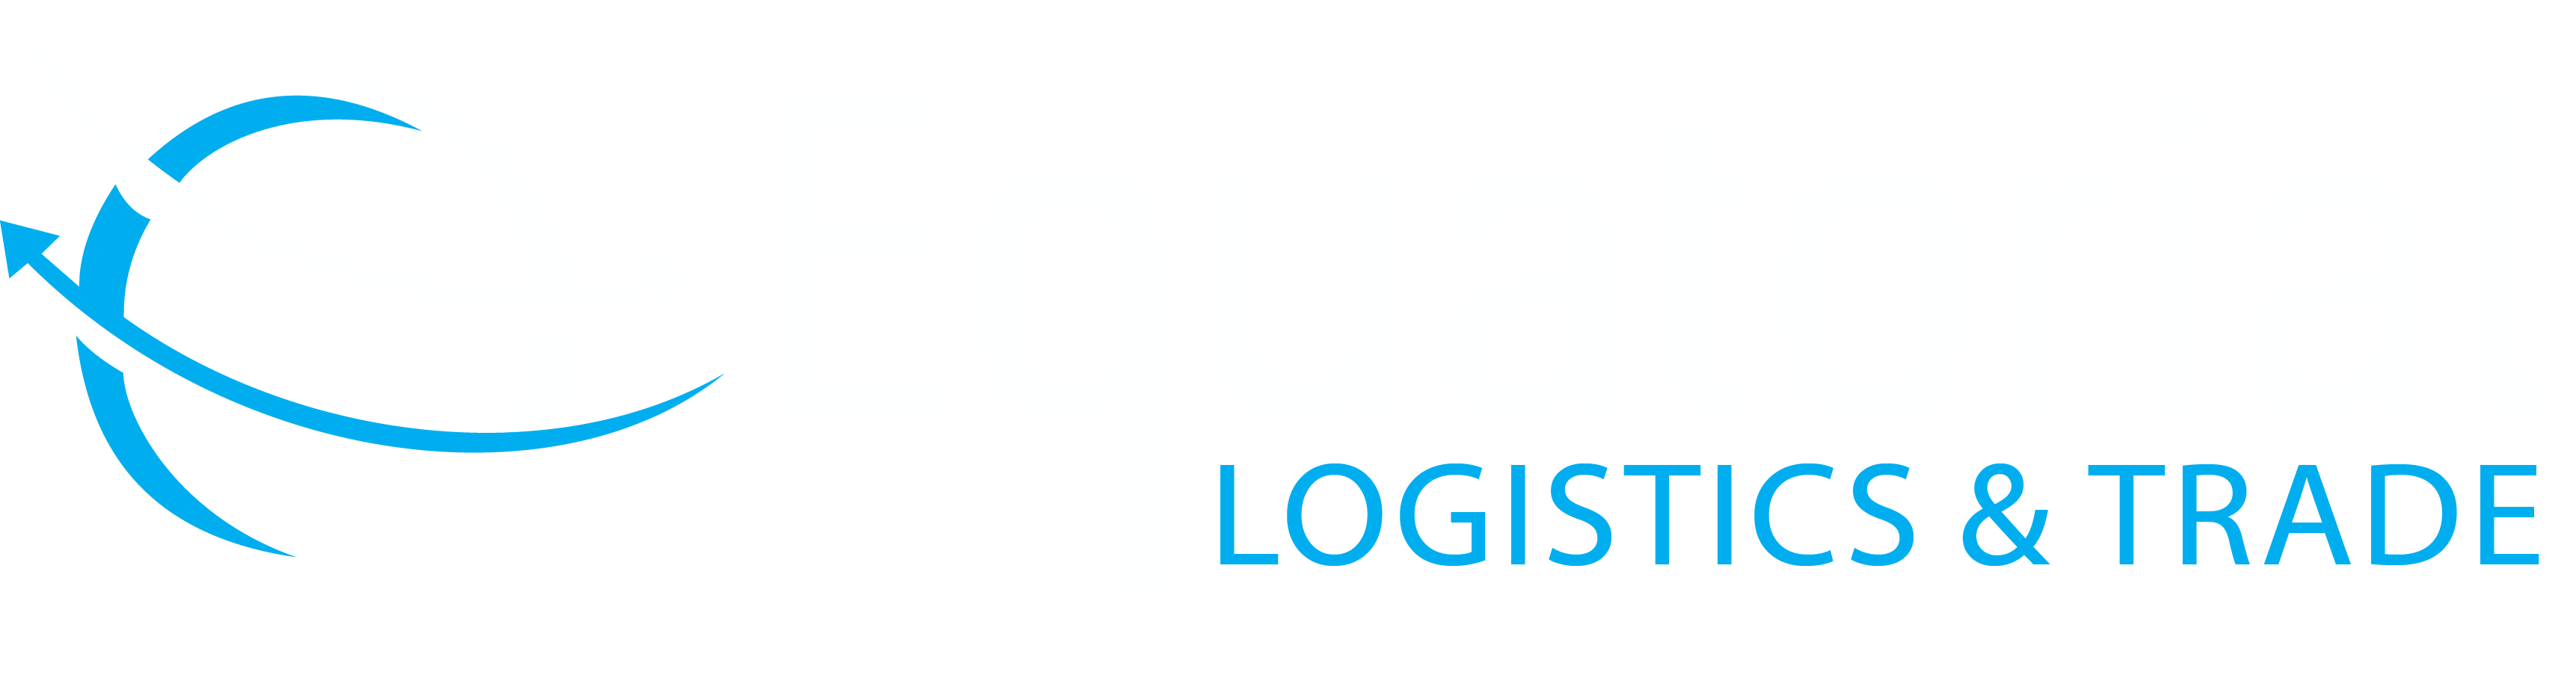 Equator Logistics Services